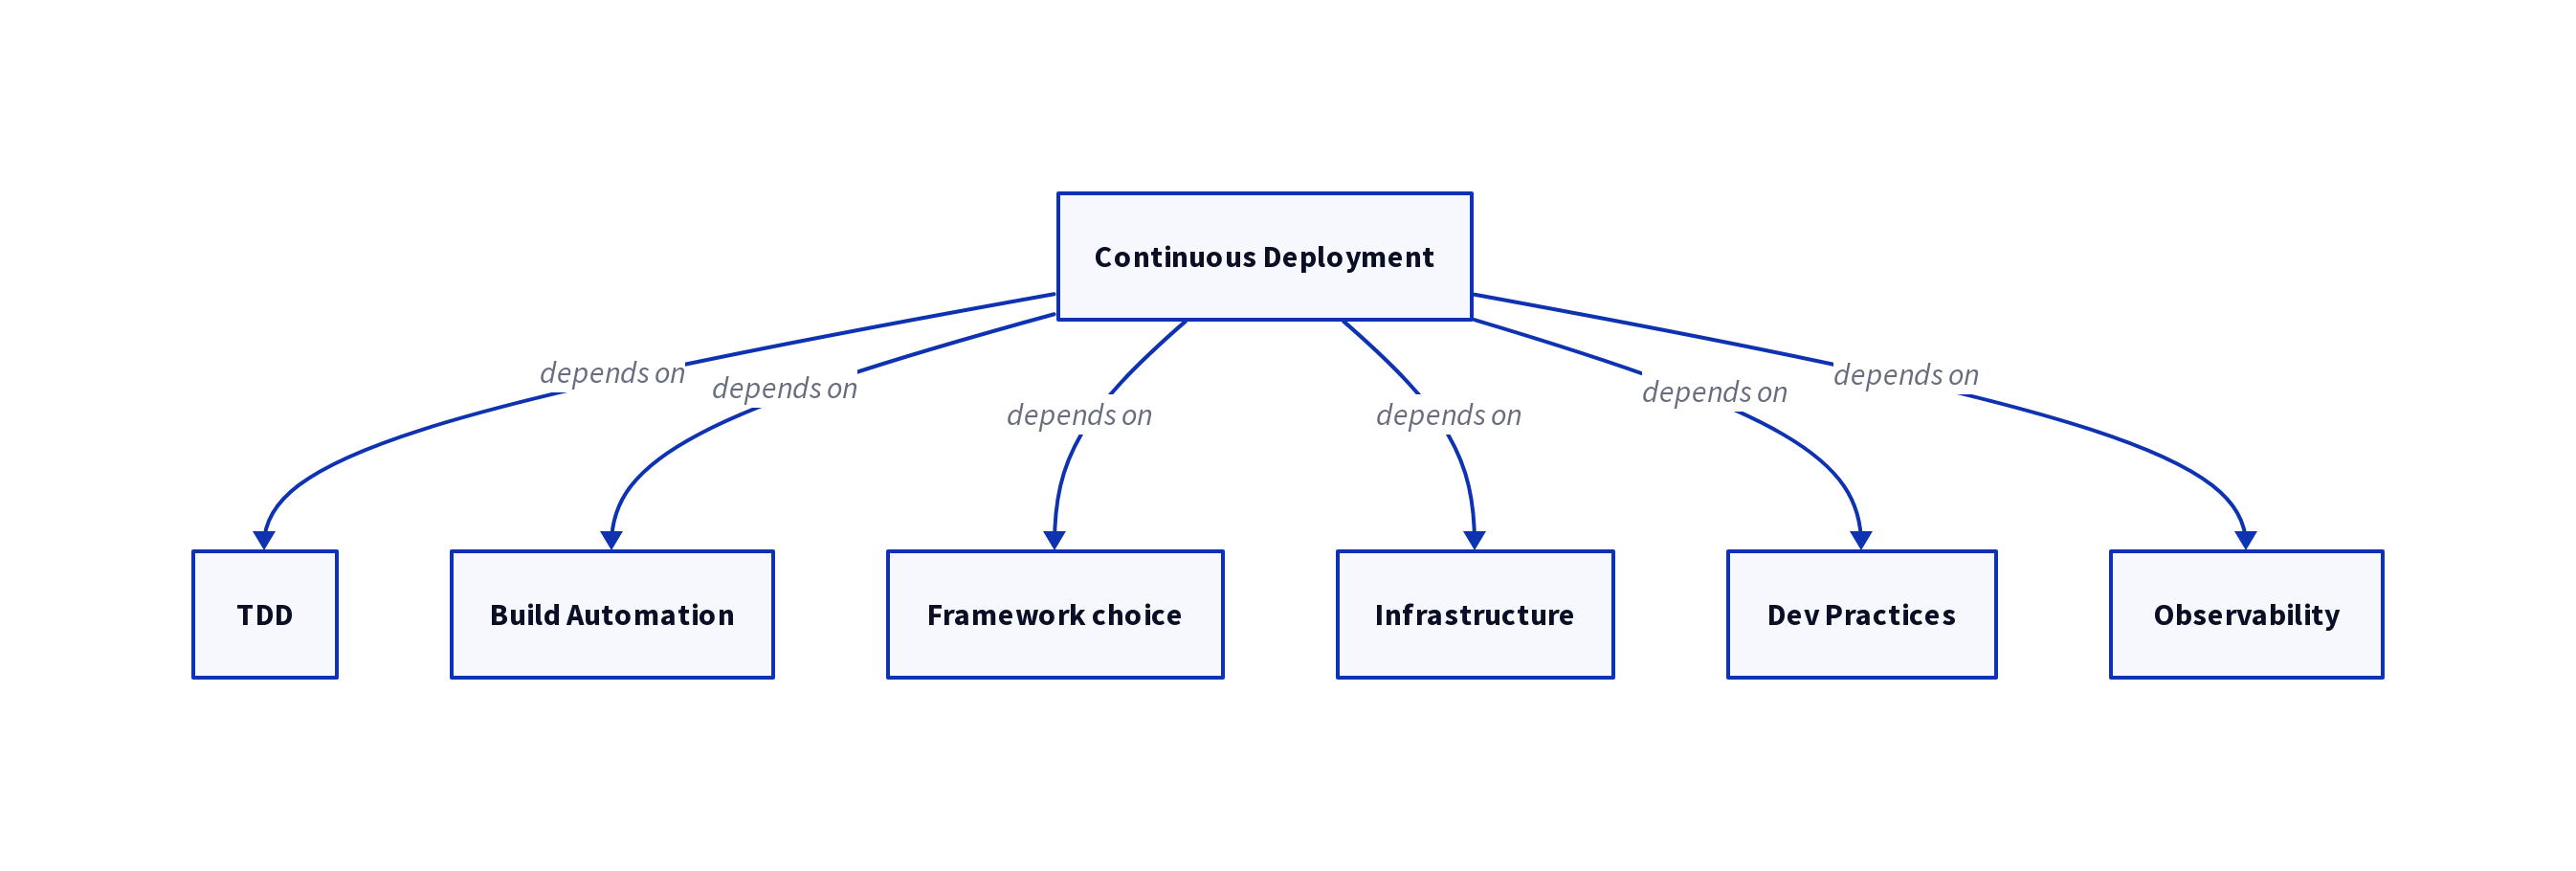 continuous-deployment-dependencies.png